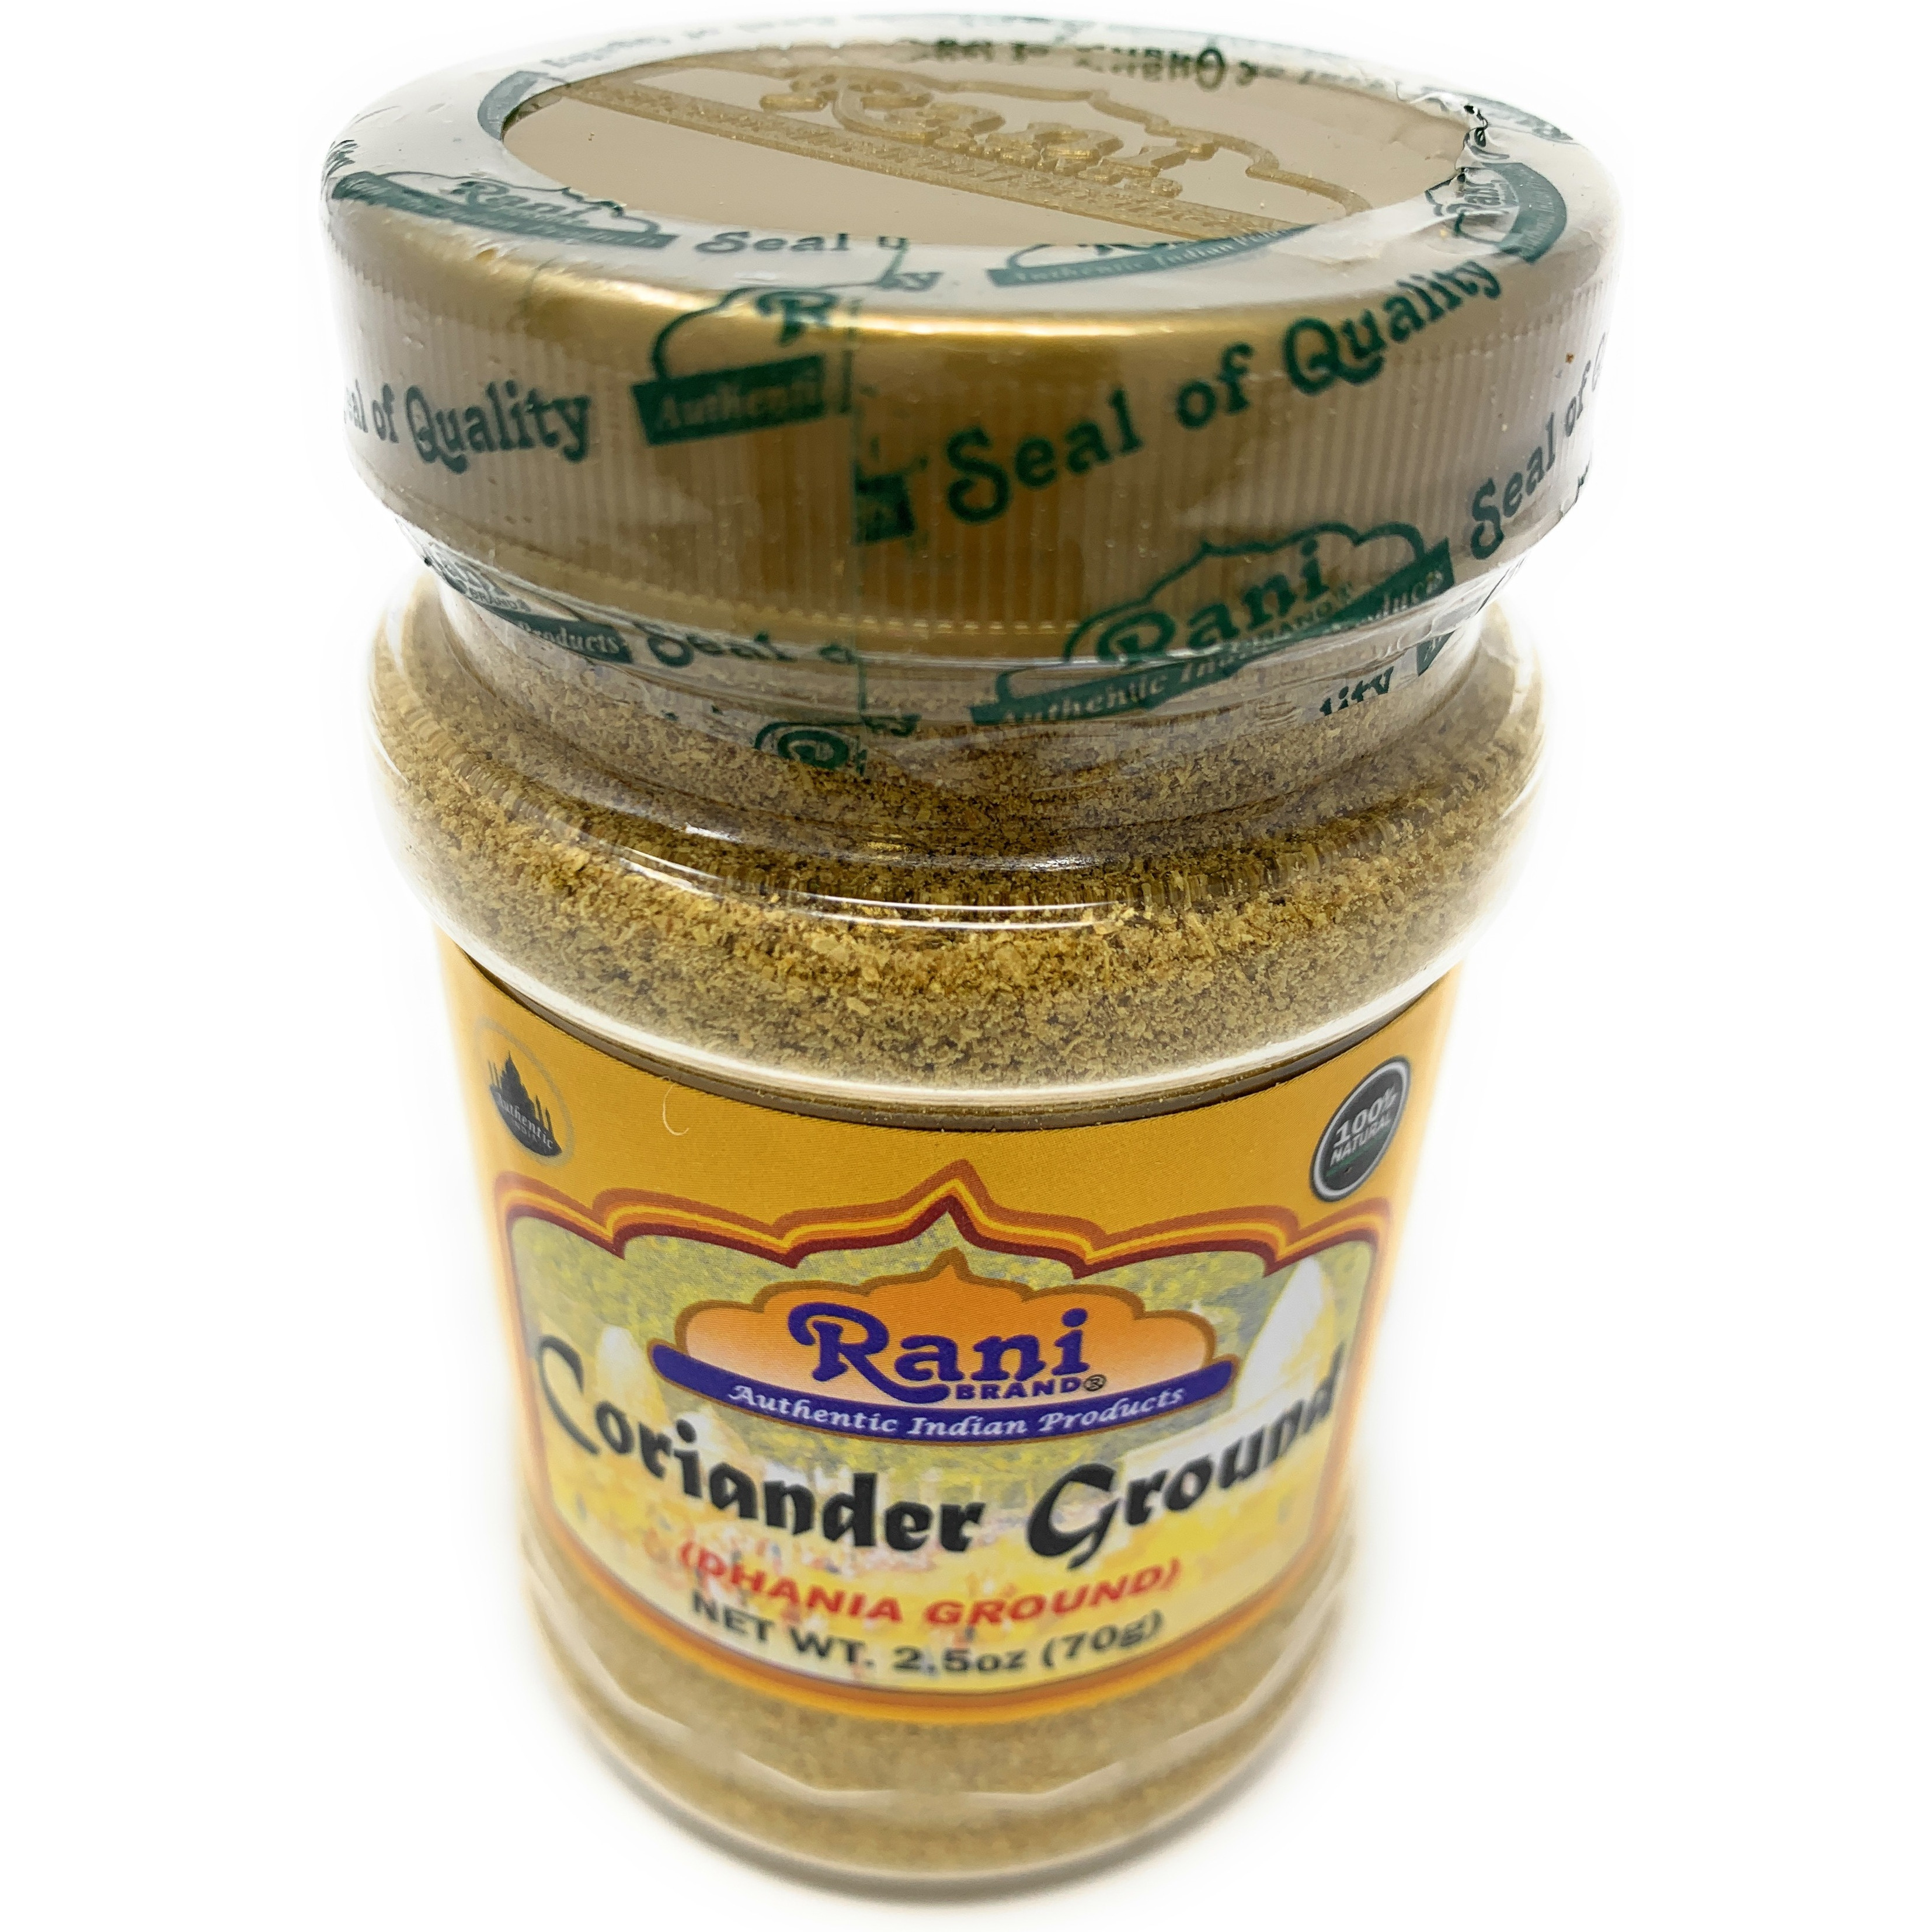 Rani Coriander Ground Powder (Indian Dhania) Spice 2.5oz (70g) PET Jar ~ All Natural, Salt-Free | Vegan | No Colors | Gluten Free Ingredients | NON-GMO | Indian Origin